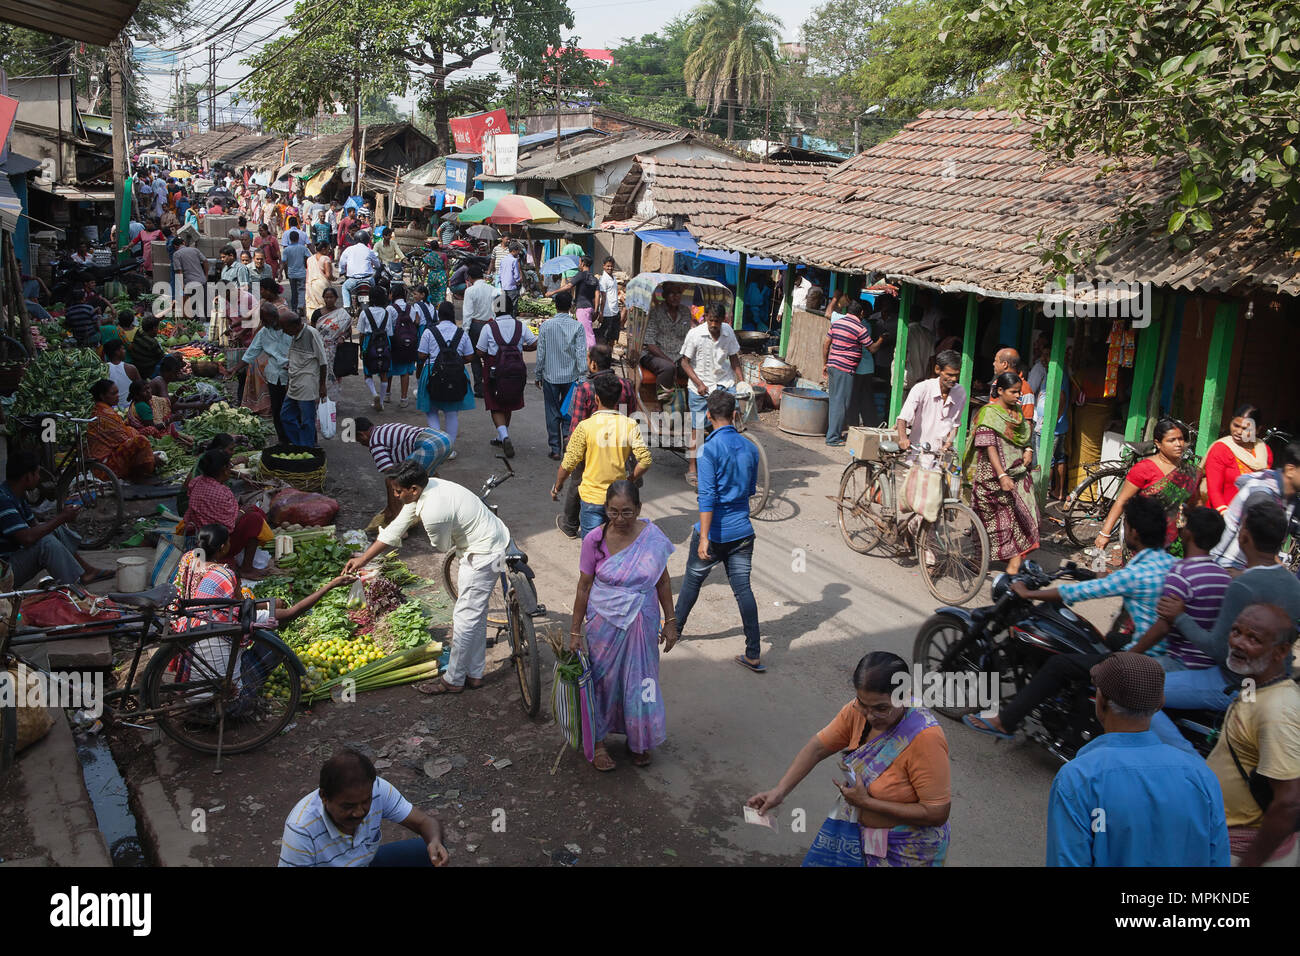 India, West Bengal, Kolkata, The market street in the Garia district. Stock Photo